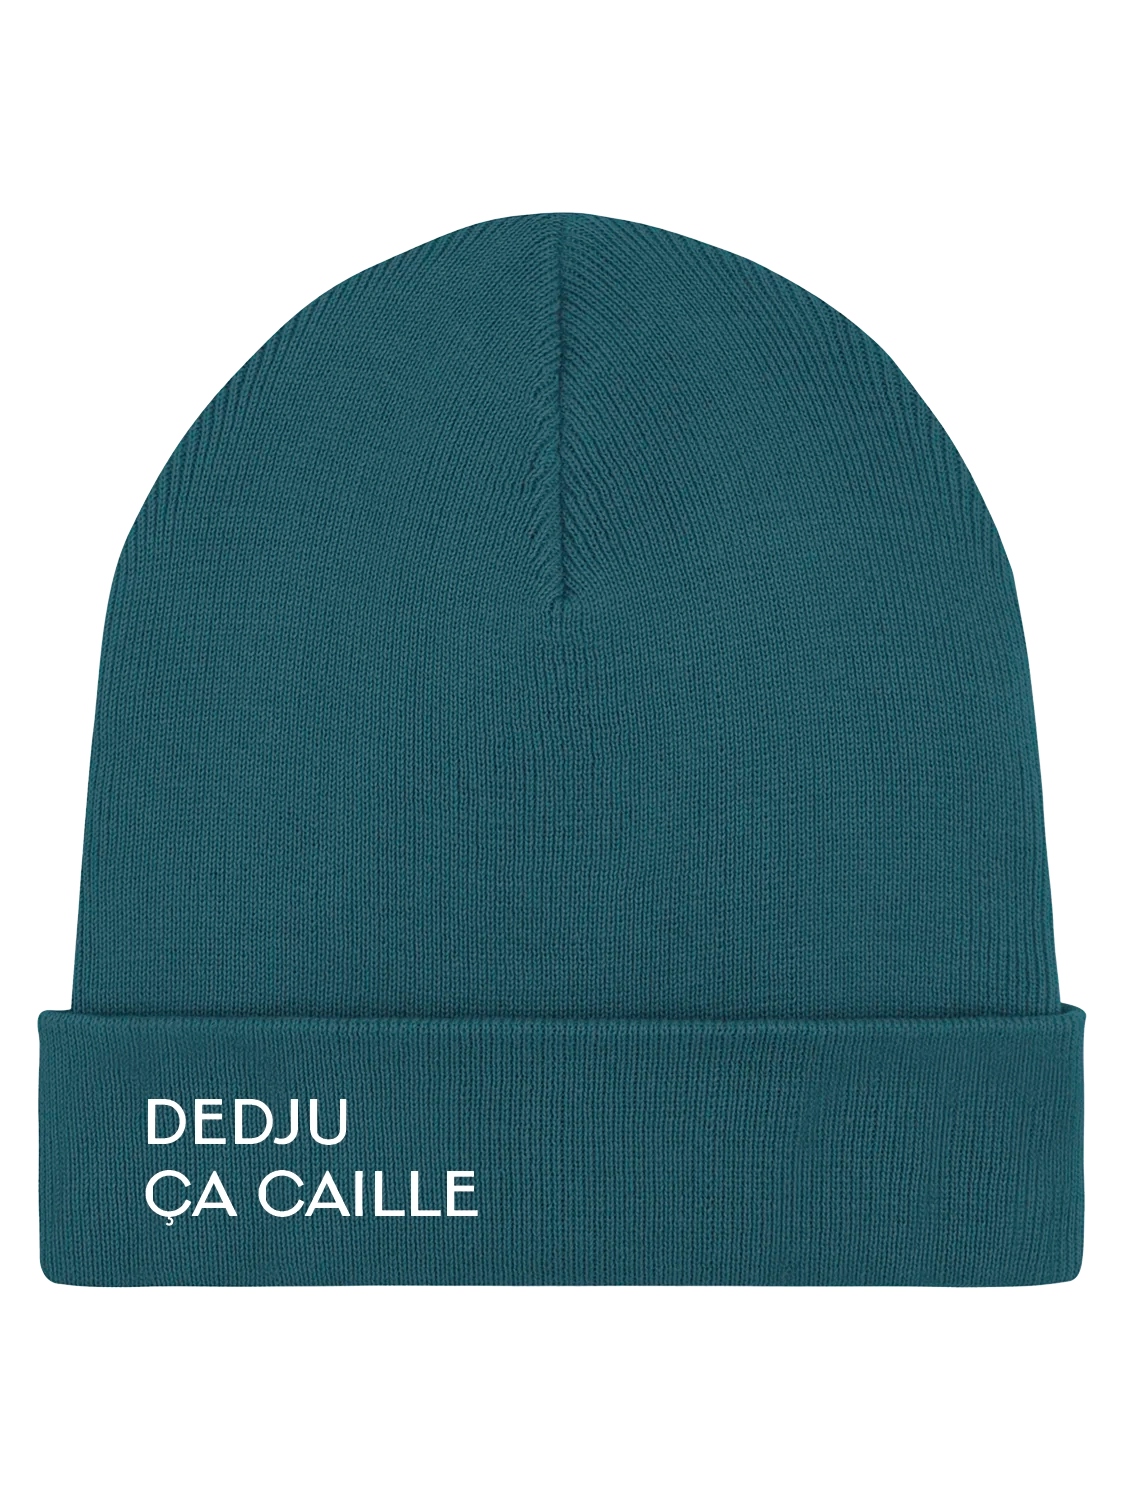 Dedju_ca_caille_STAU772_Bonnet_premium_simple-24